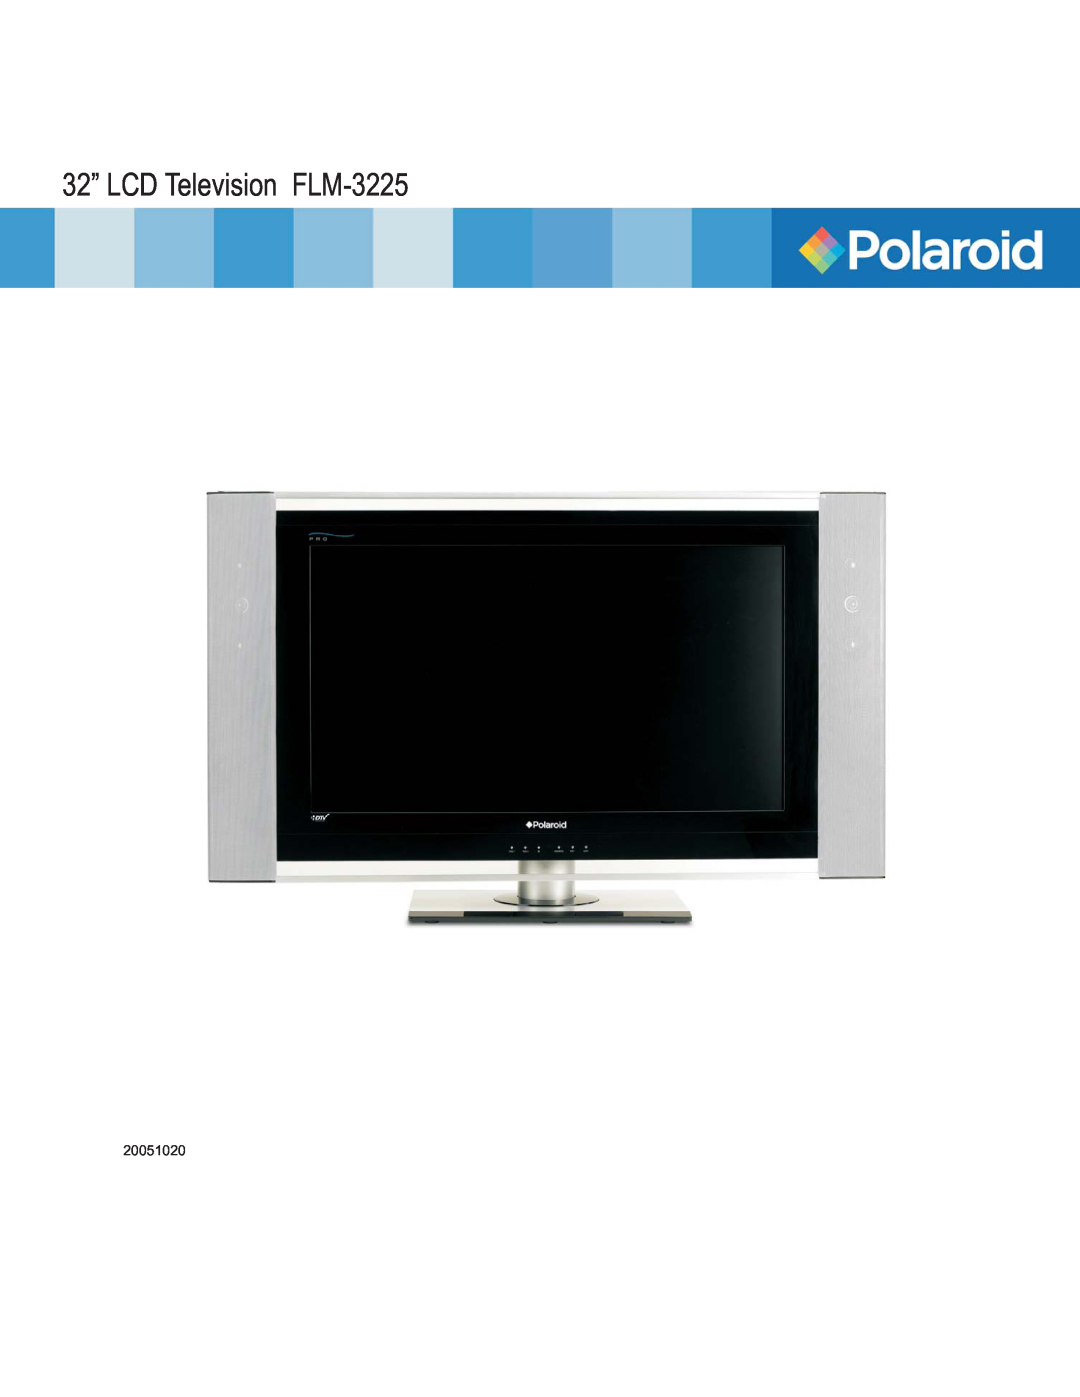 Polaroid manual 32” LCD Television FLM-3225, 20051020 